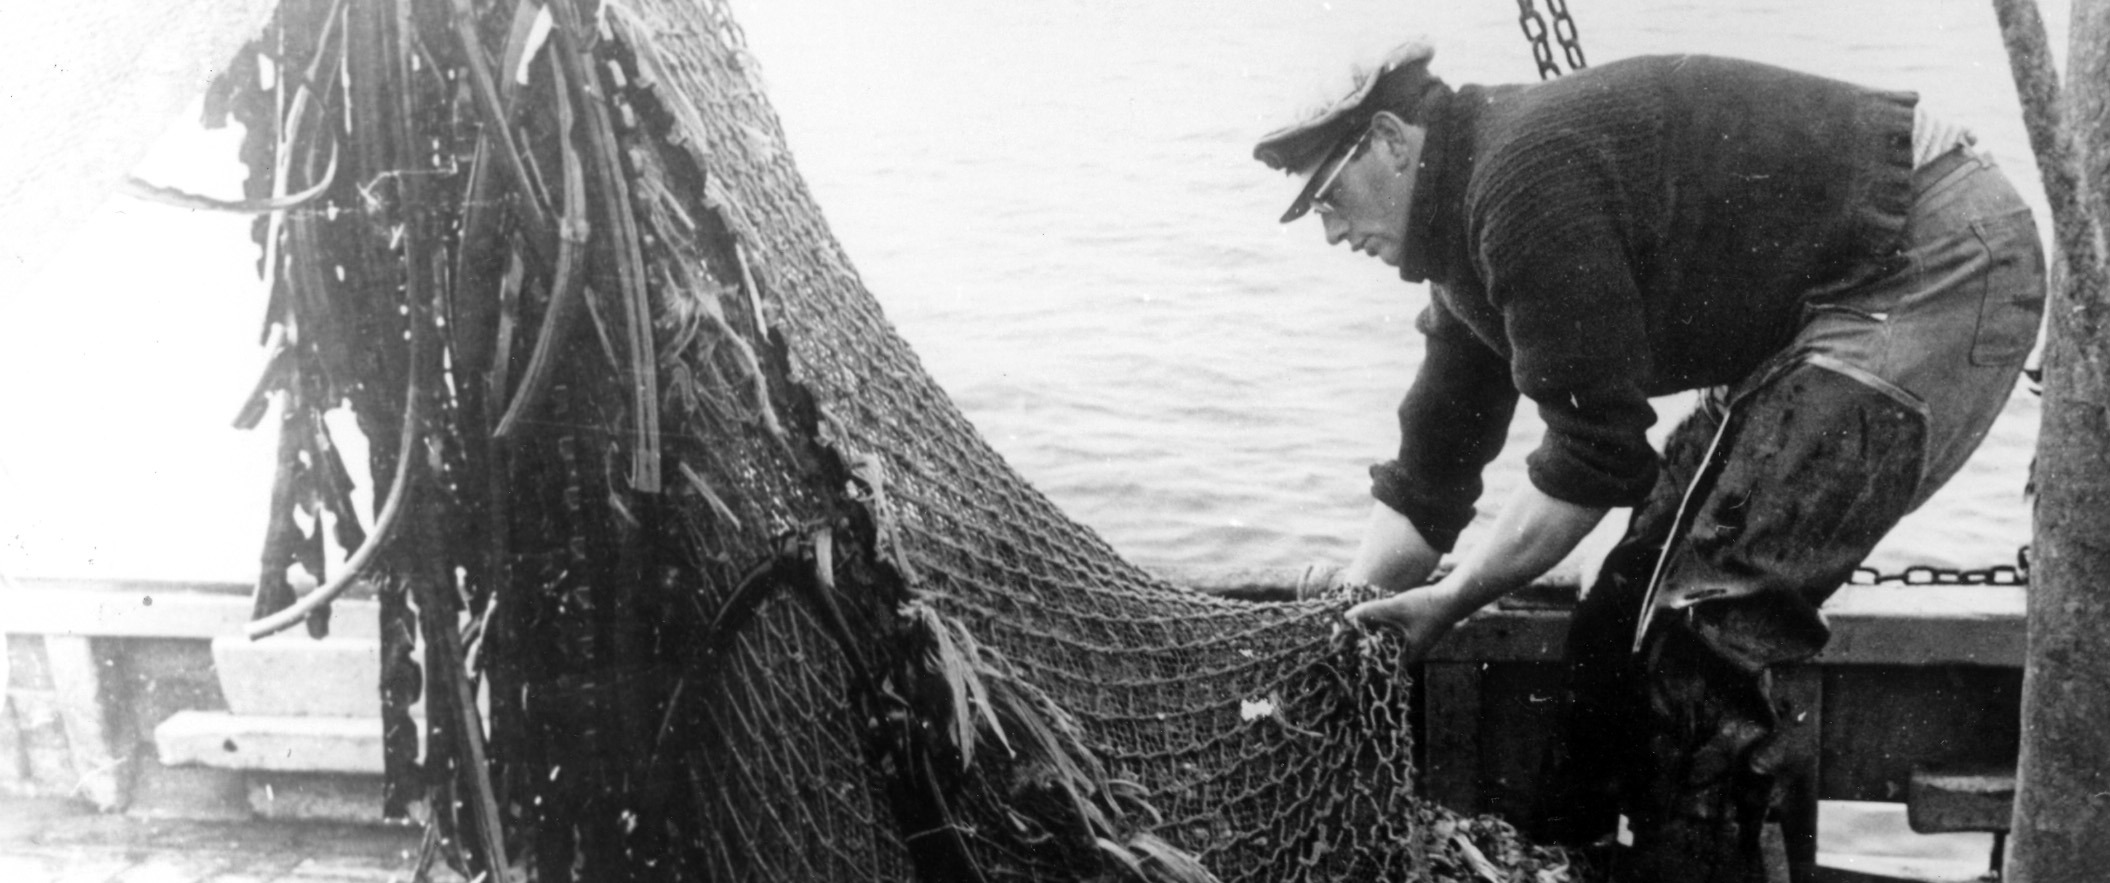 Emptying the fishing net